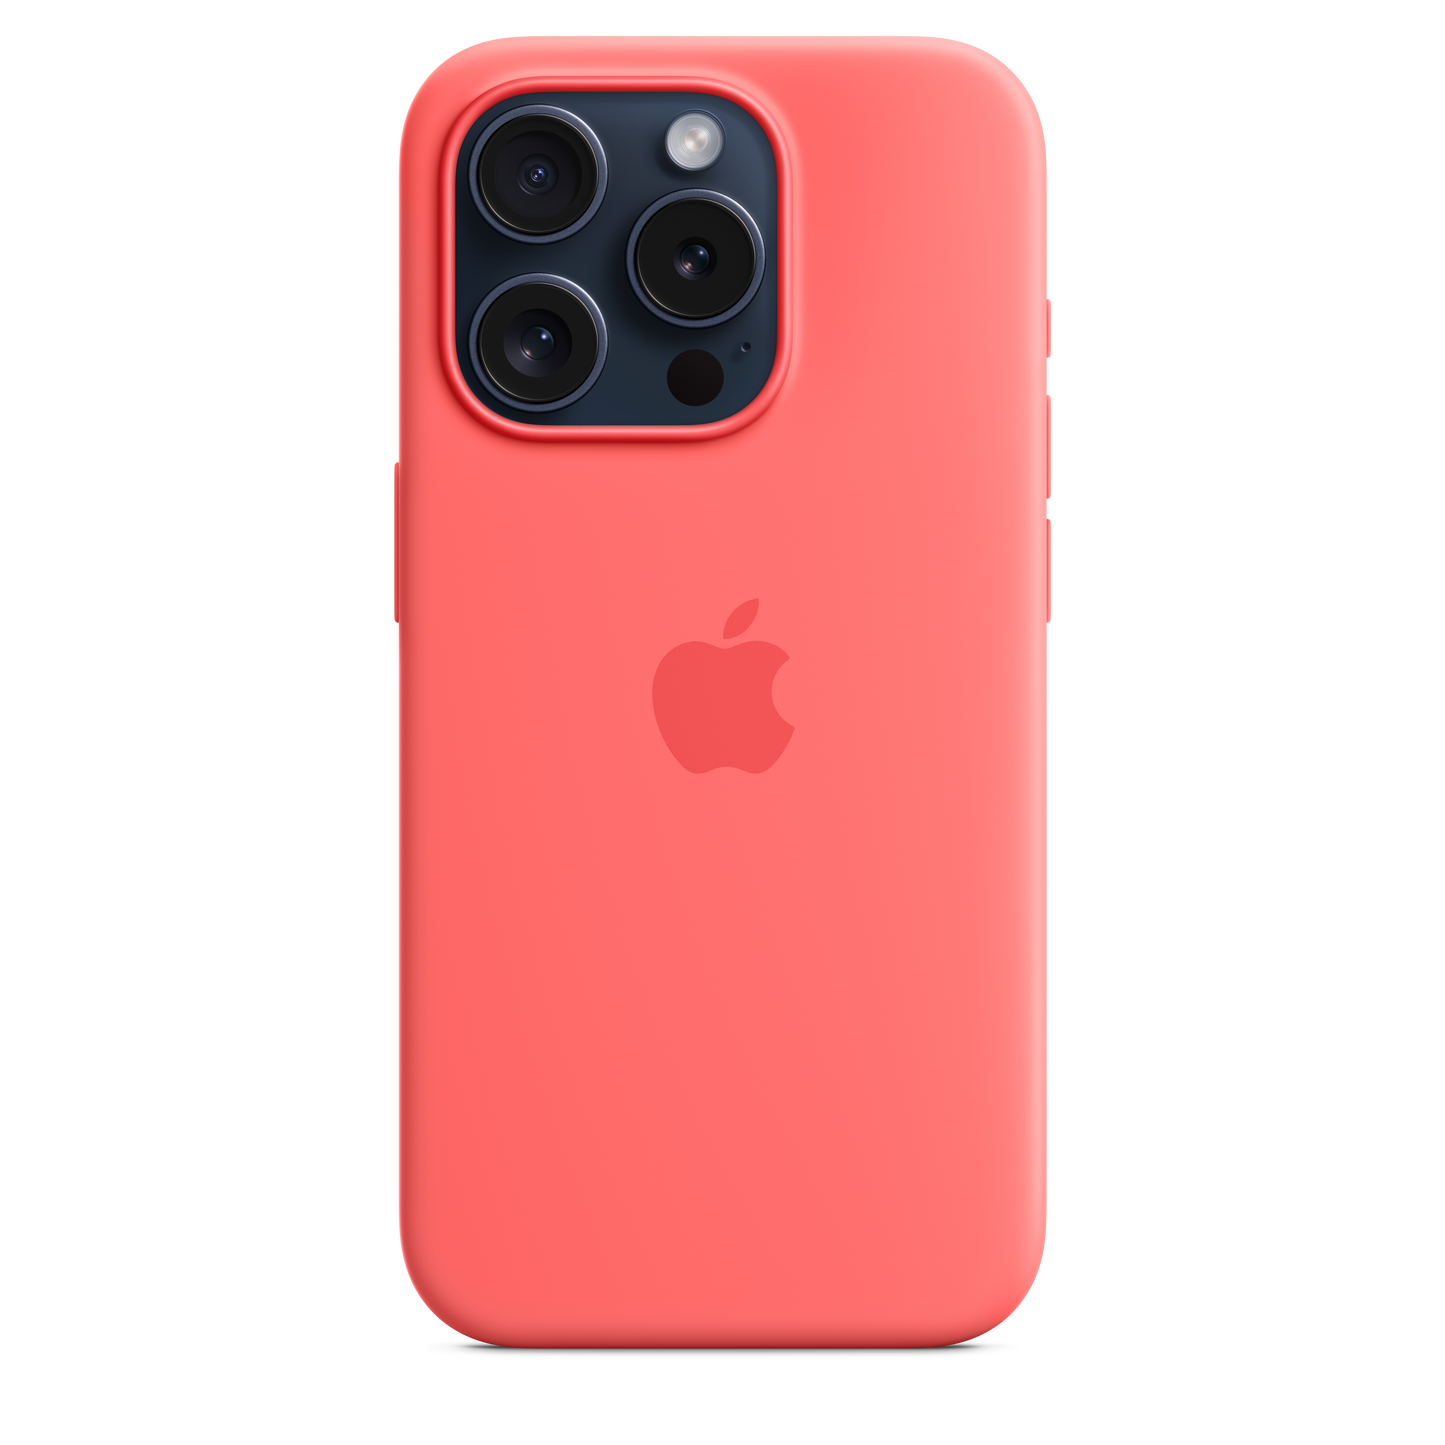 Funda Apple de Silicona Roja para iPhone 11 Pro